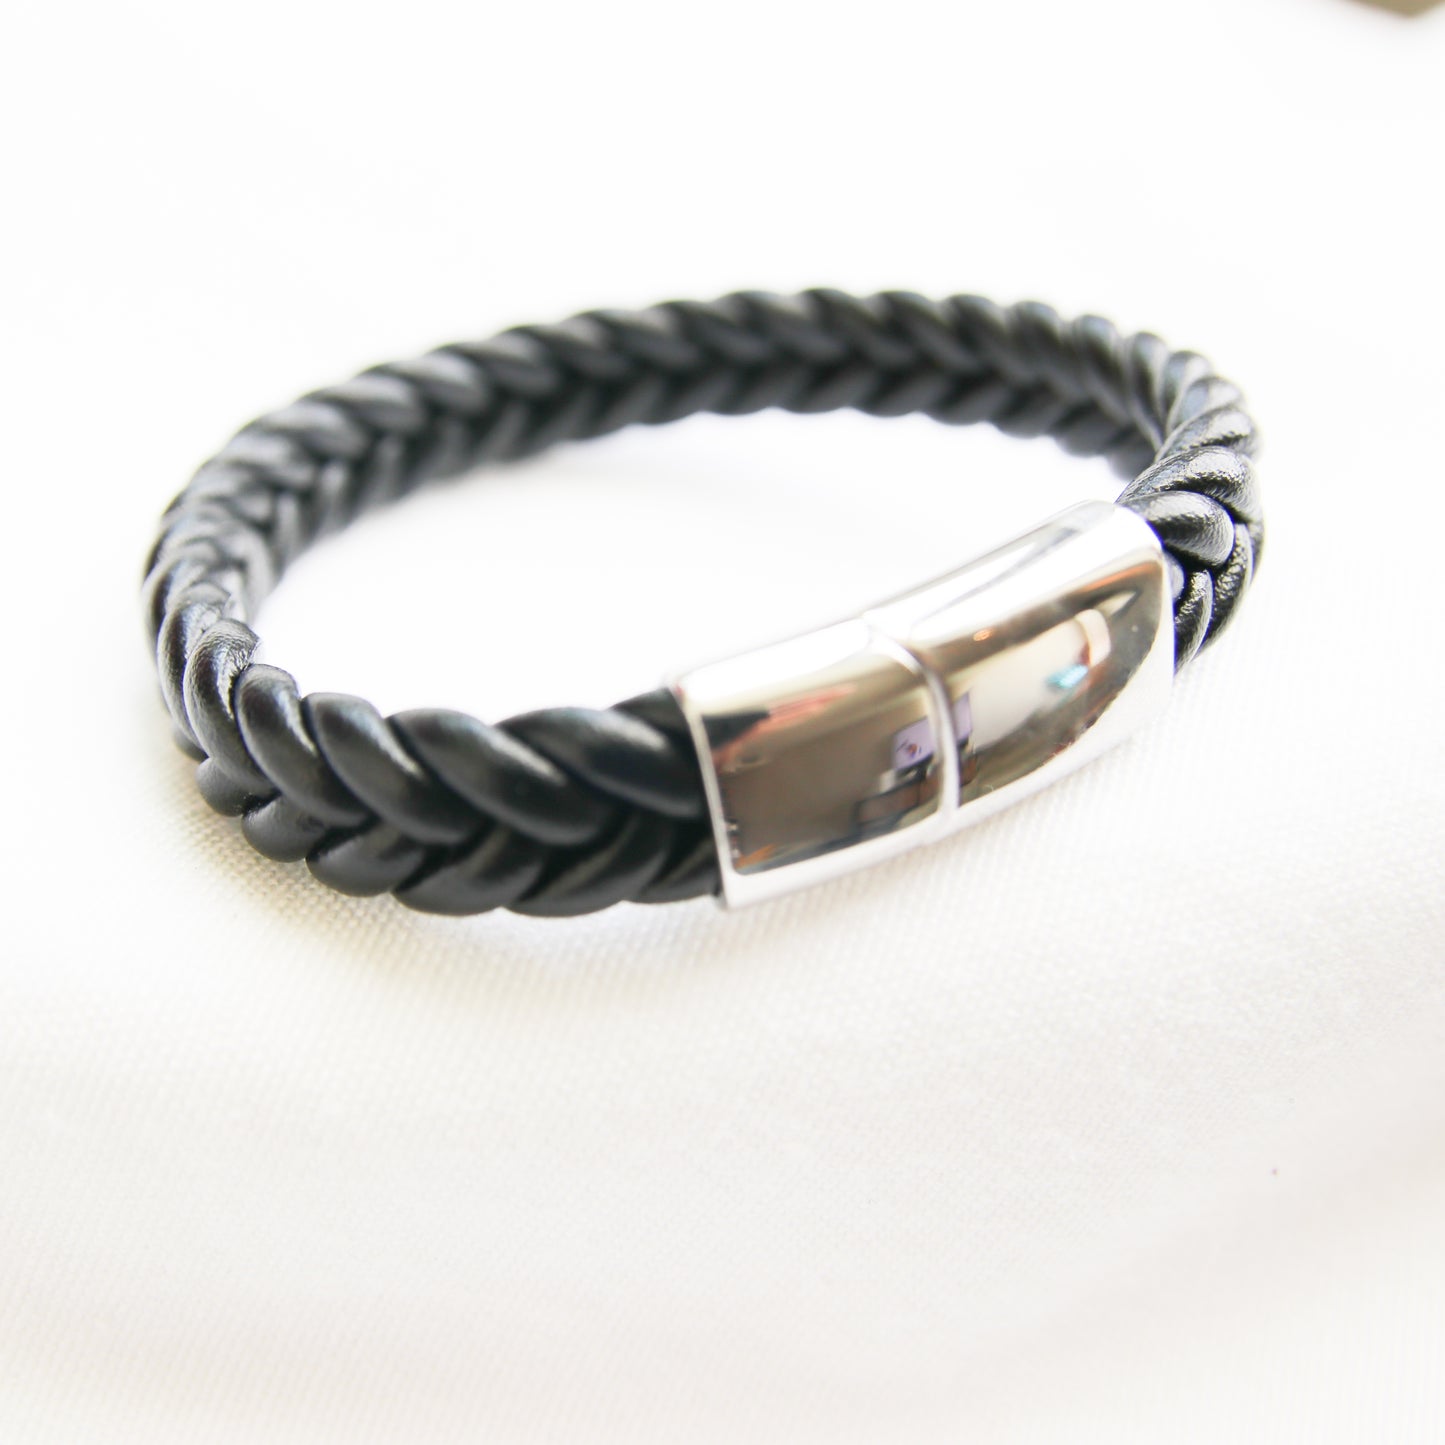 Mattew Black Leather Stainless Steel Bracelet